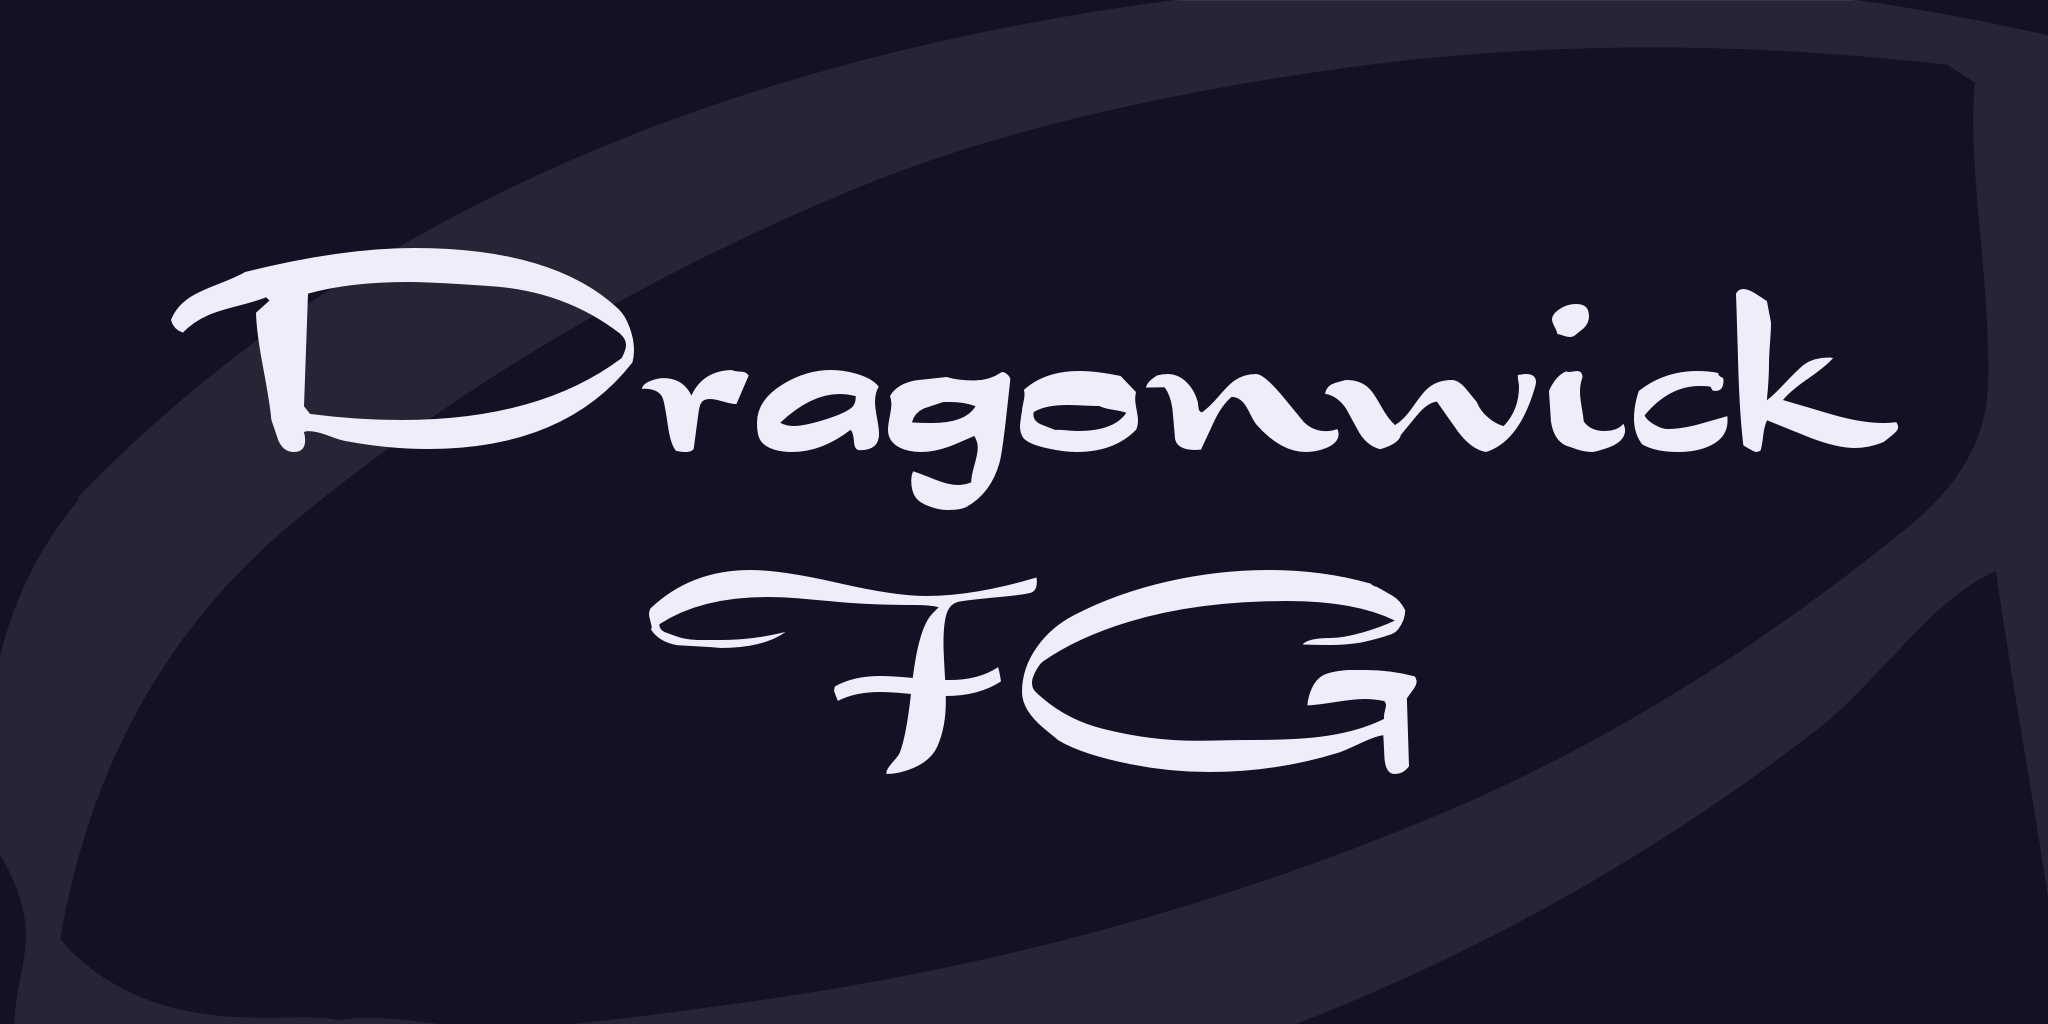 Dragonwick Fg